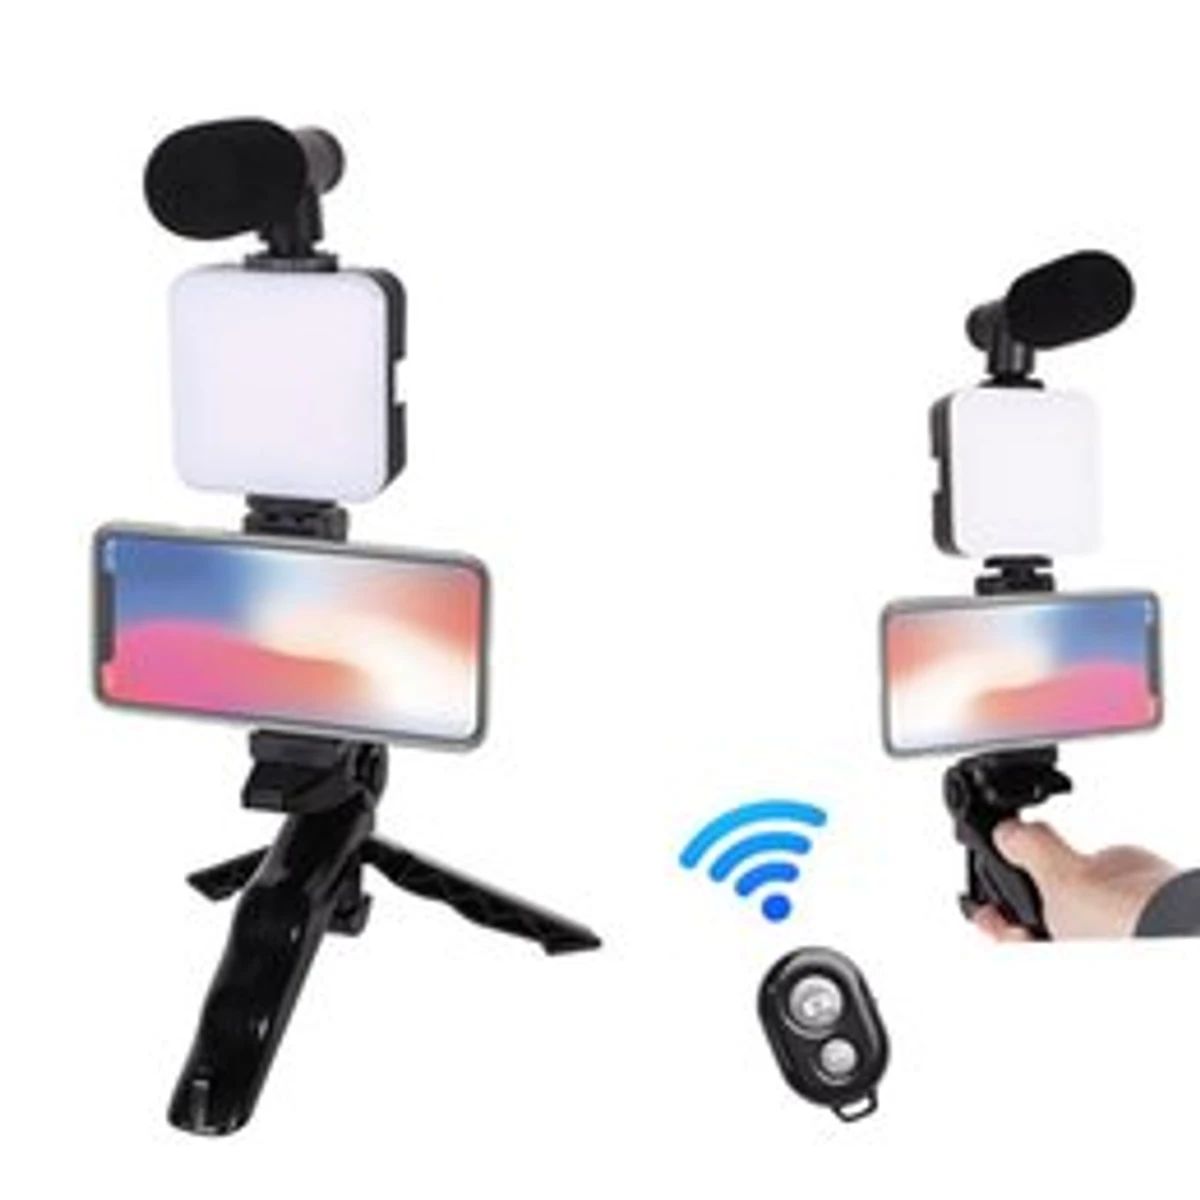 Smartphone Camera Video Kit, Shotgun Microphone Kit with LED Light, Adjust Tripod Phone Holder for YouTube Recording Photography